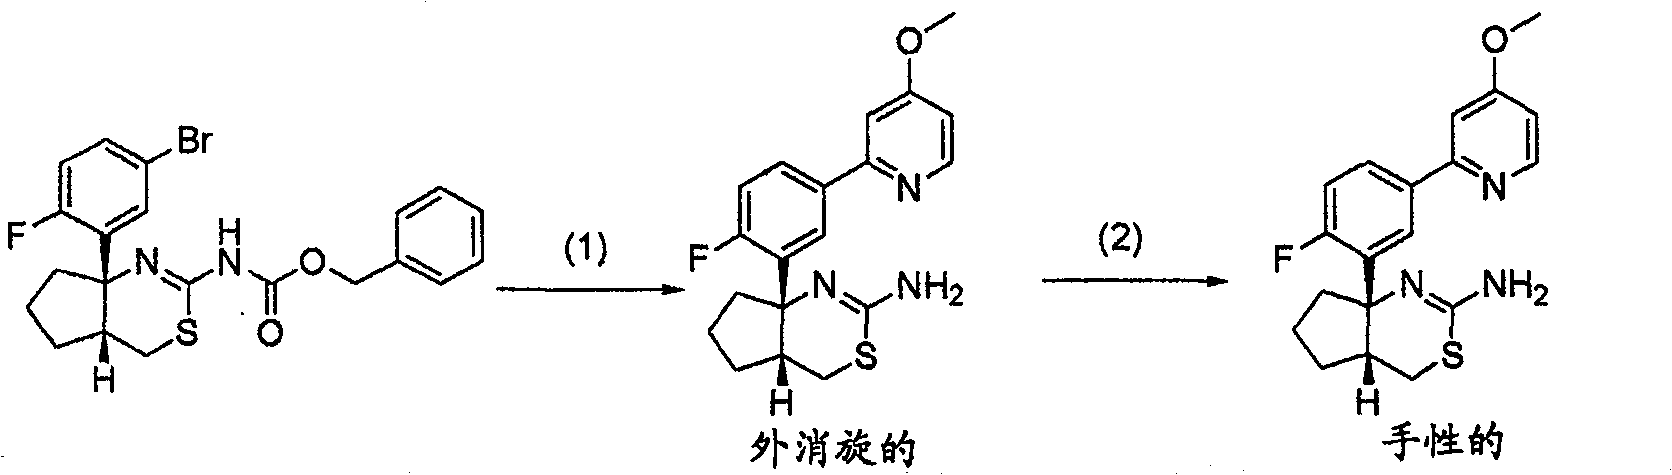 Condensed aminodihydrothiazine derivative